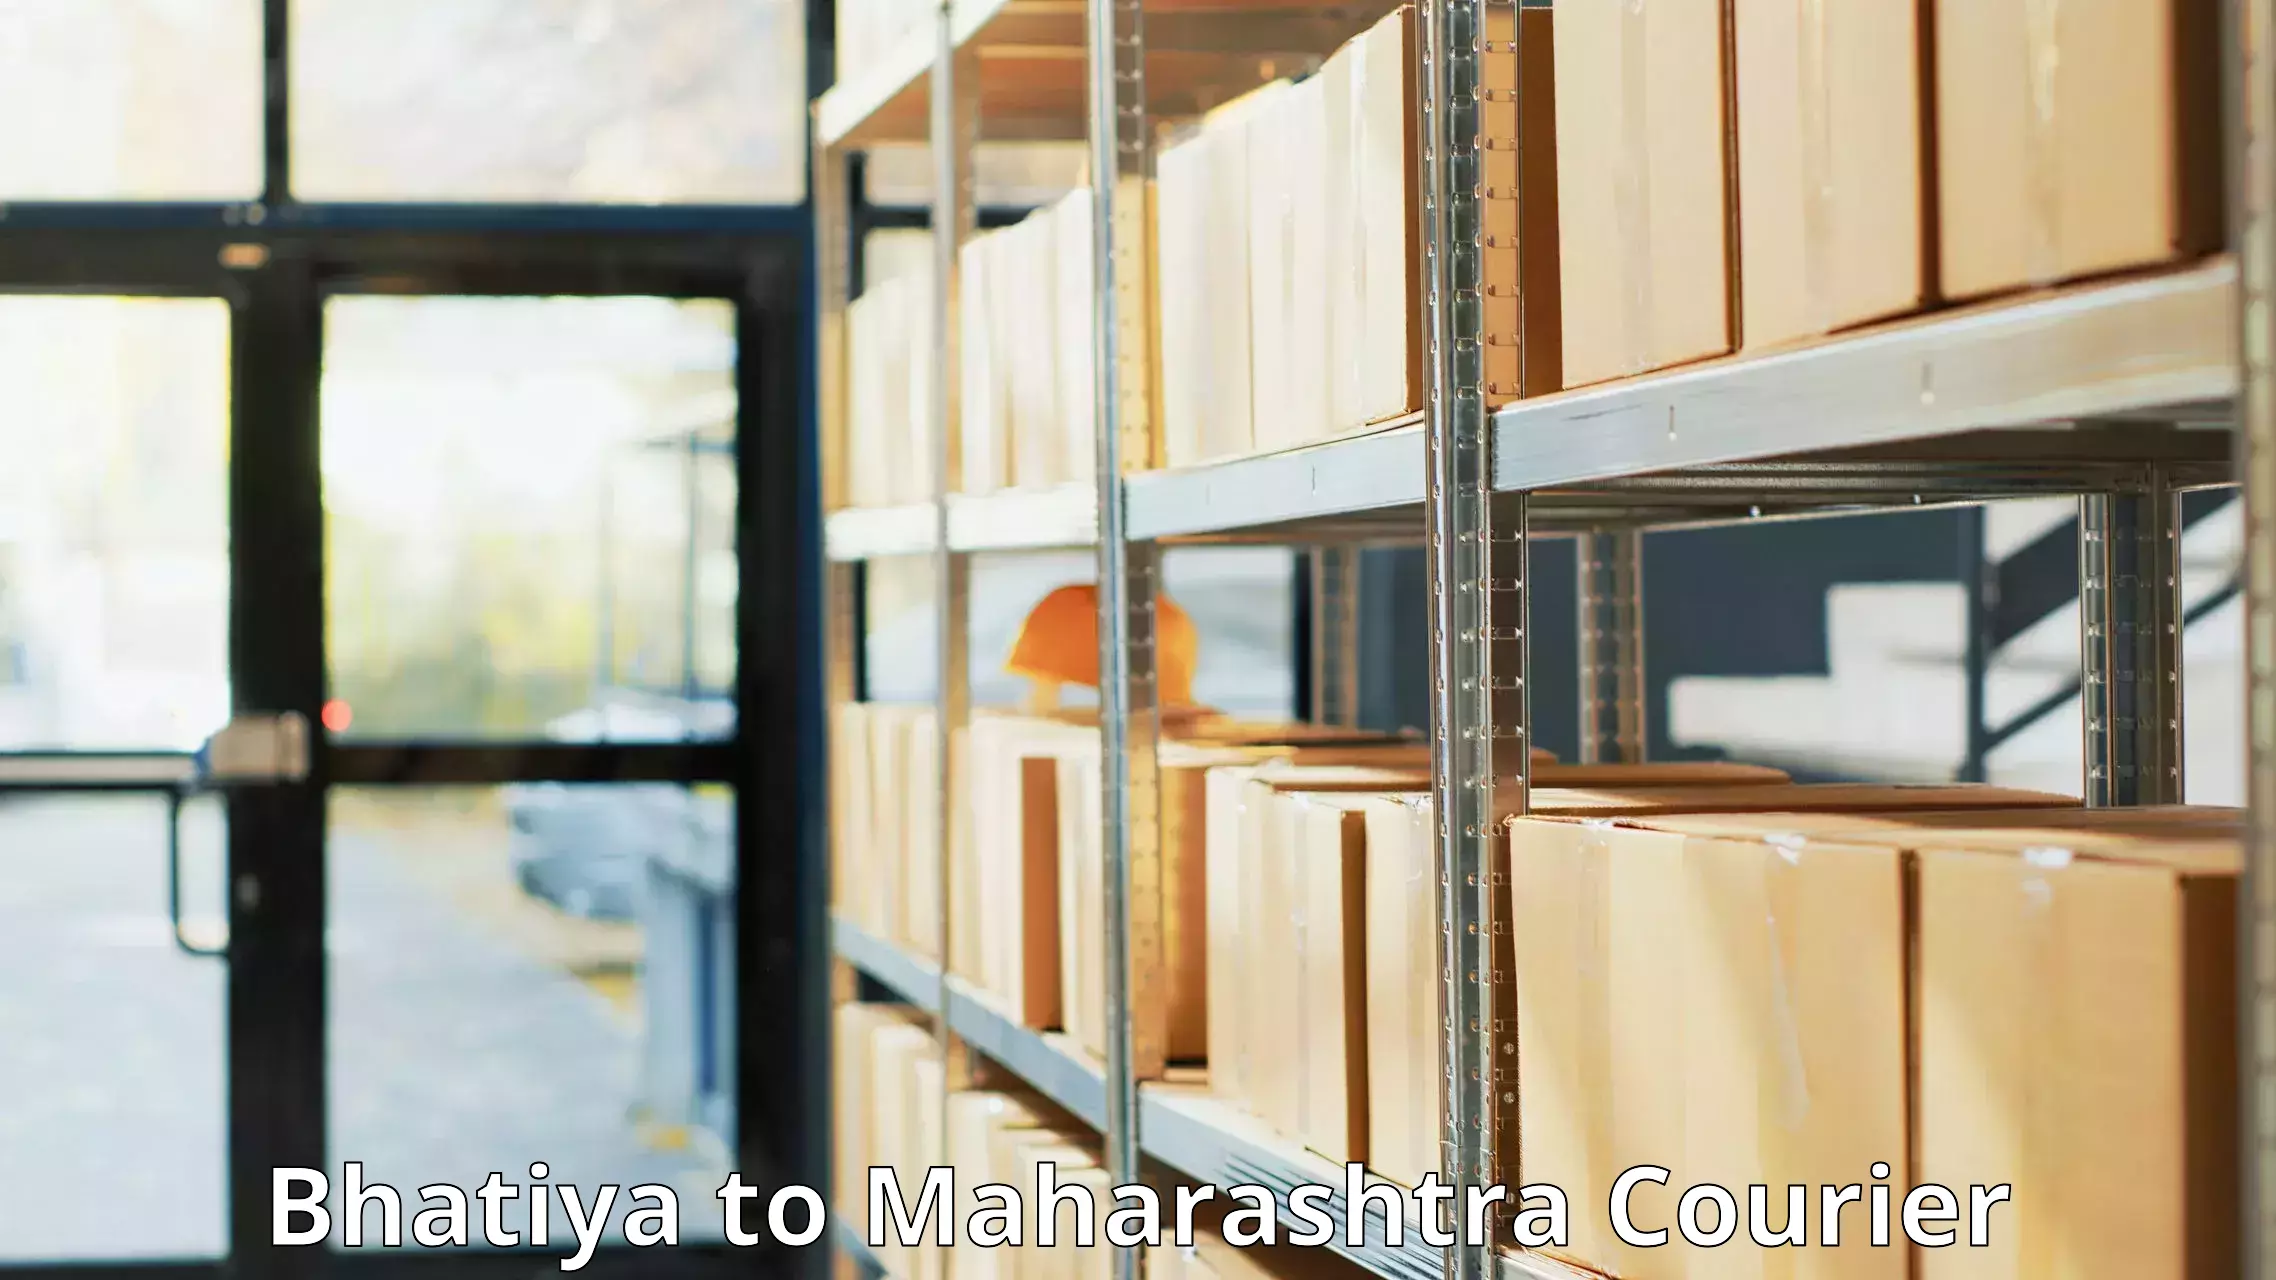 Enhanced delivery experience in Bhatiya to Mahabaleshwar